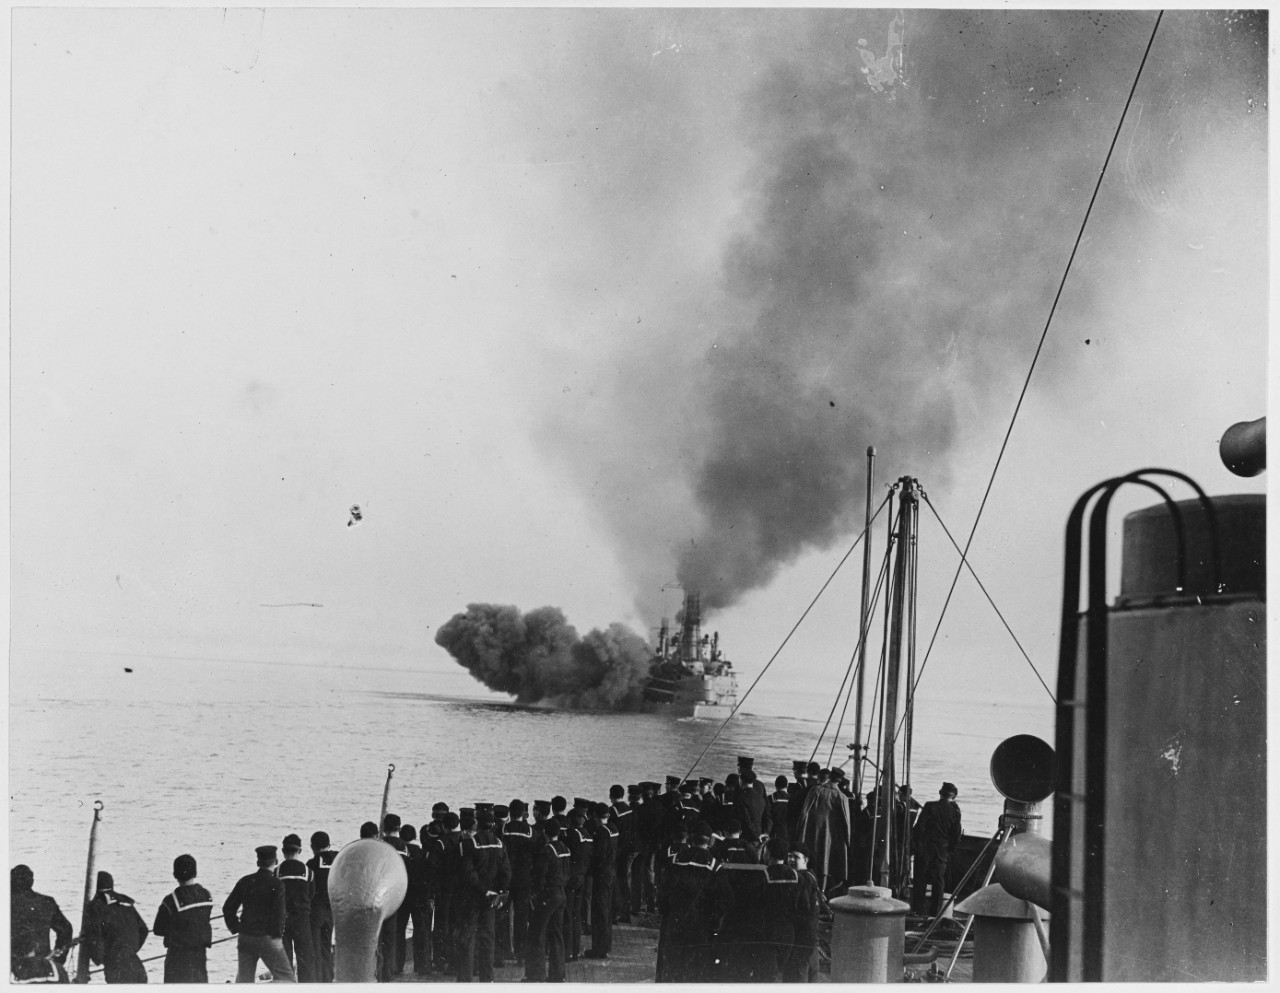 Battleship firing broadside to port - at target practice